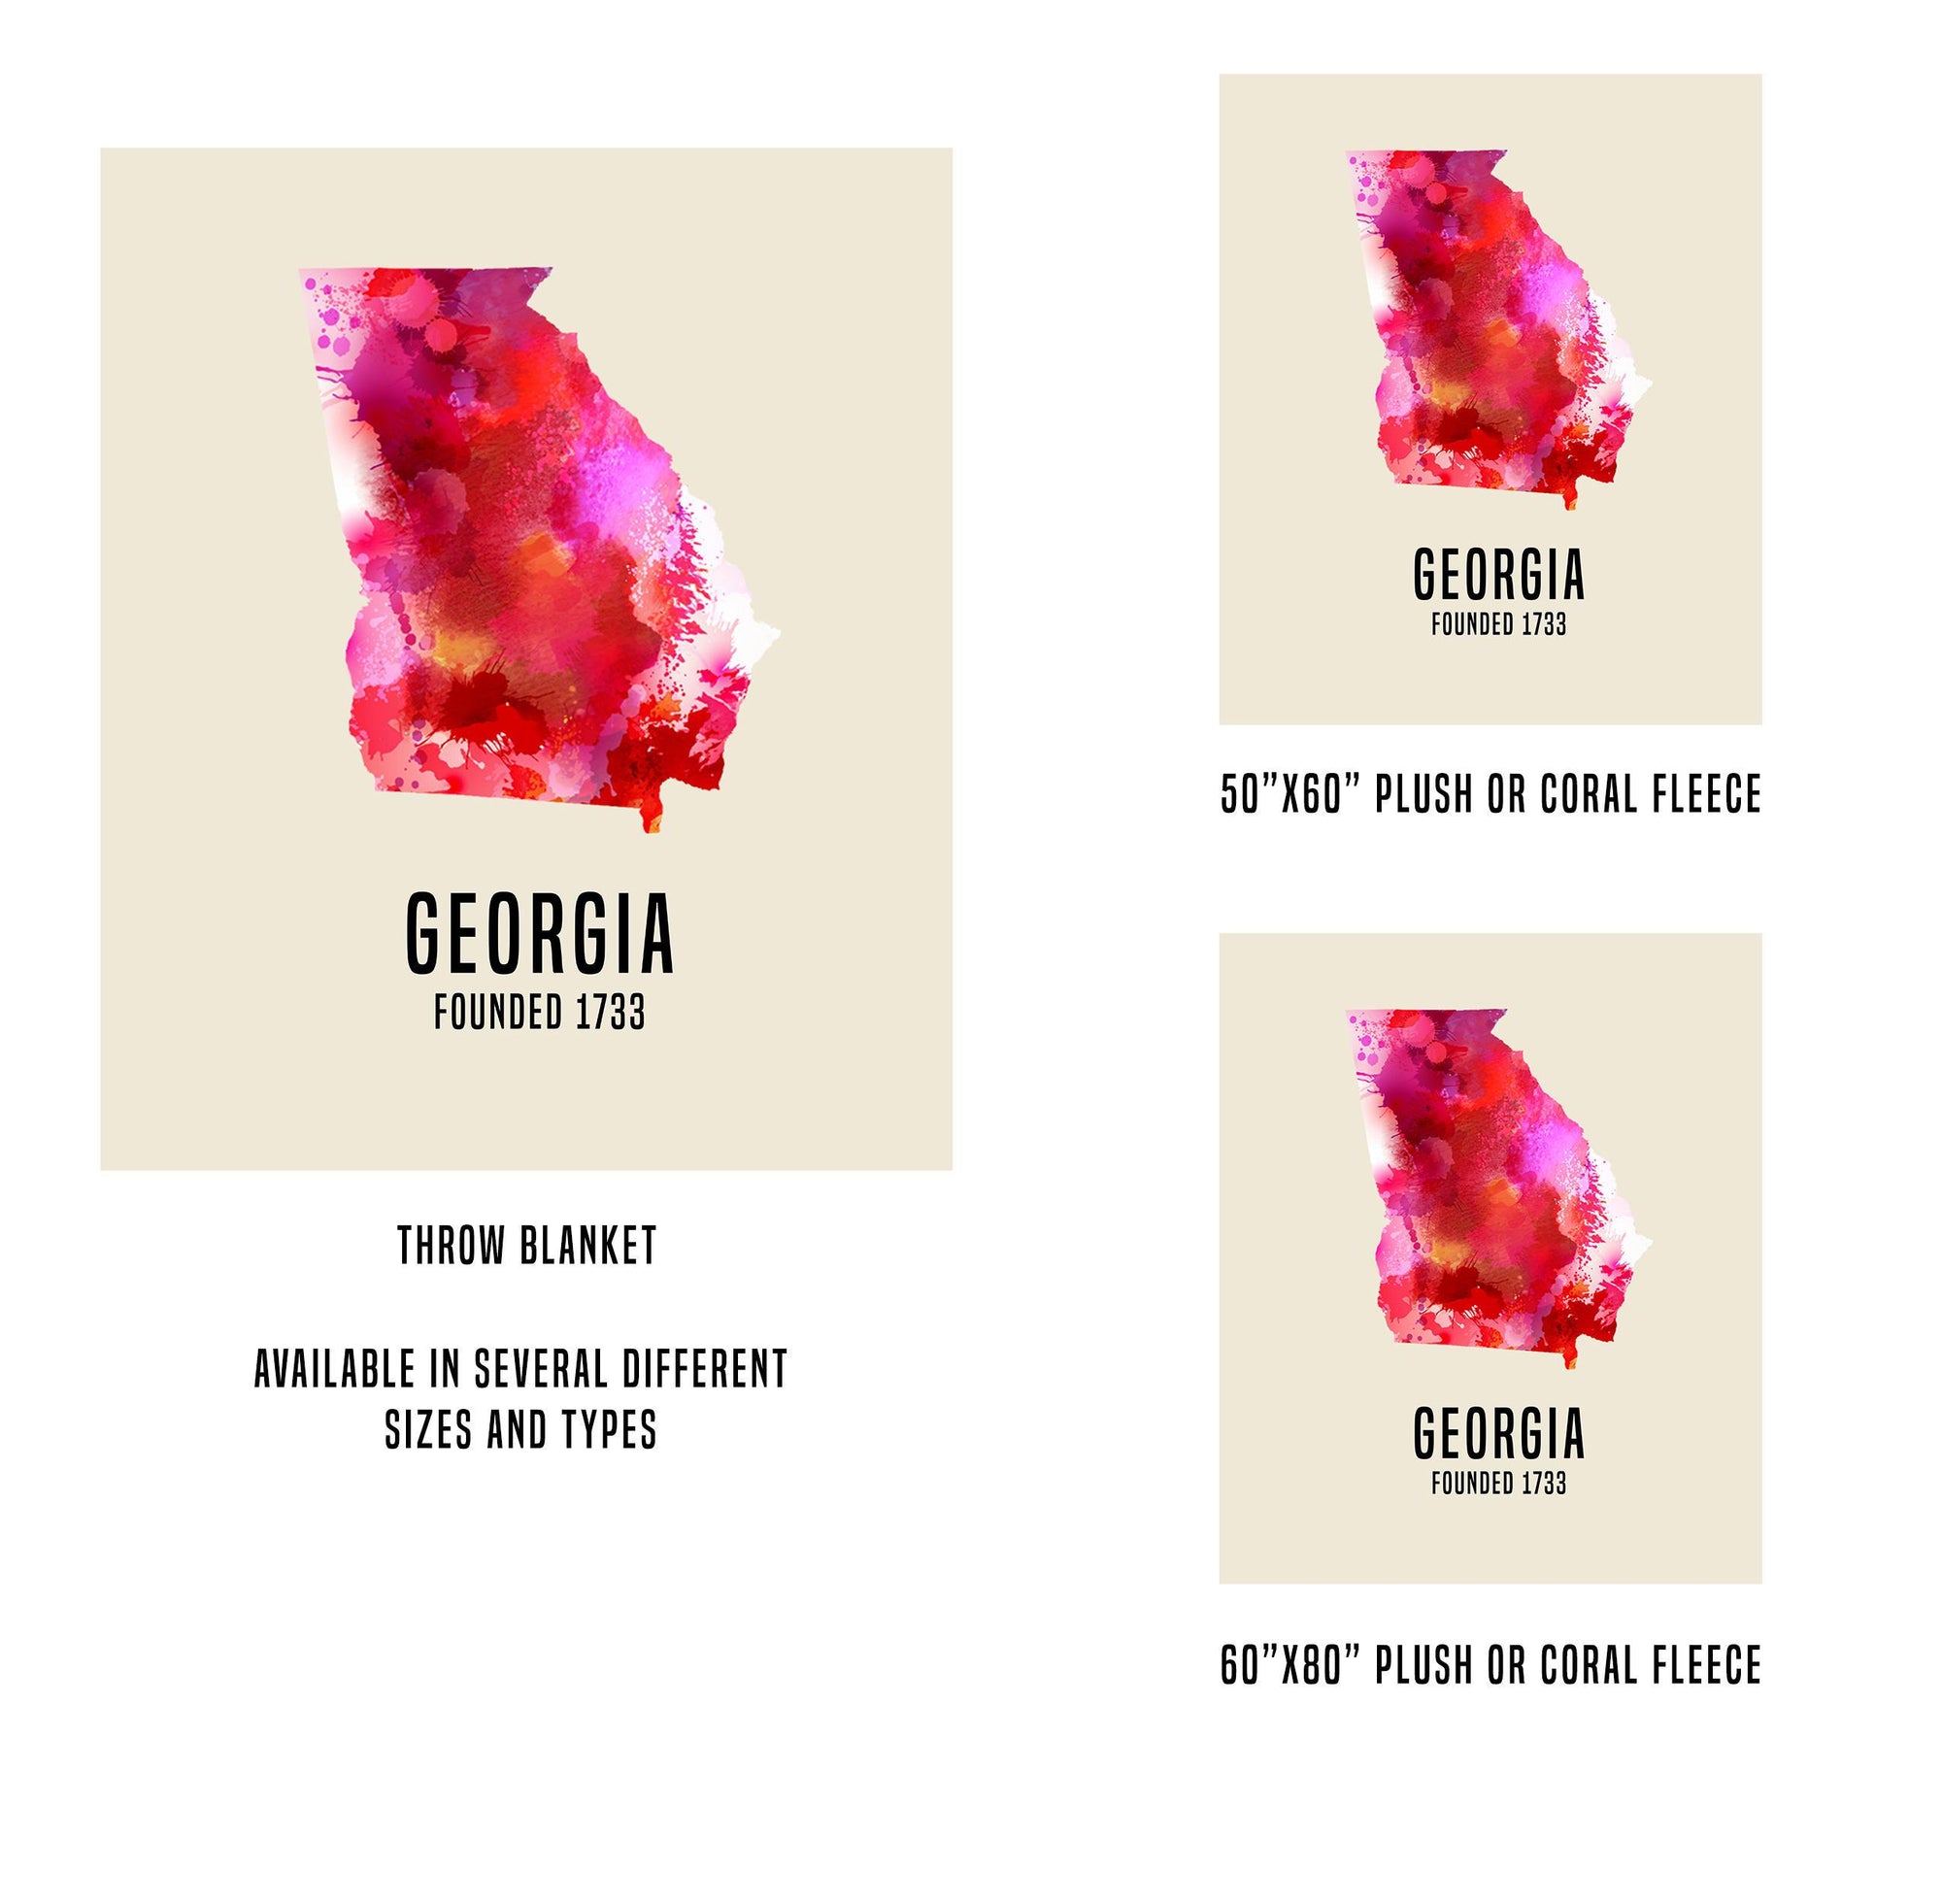 Georgia - Founded 1733